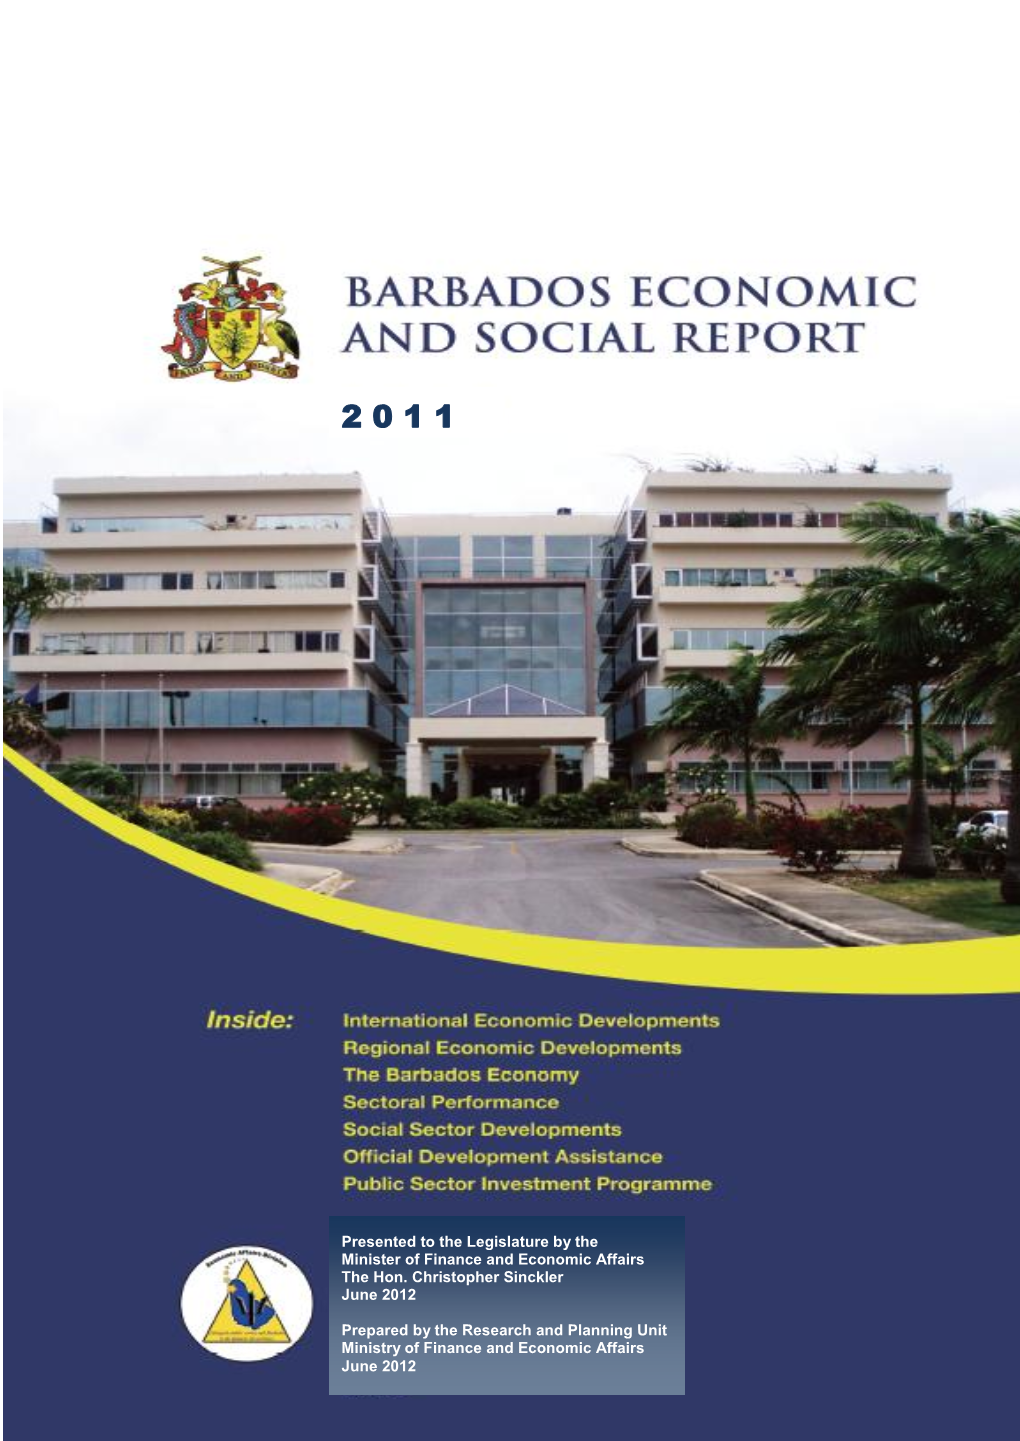 Barbados Economic and Social Report 2011